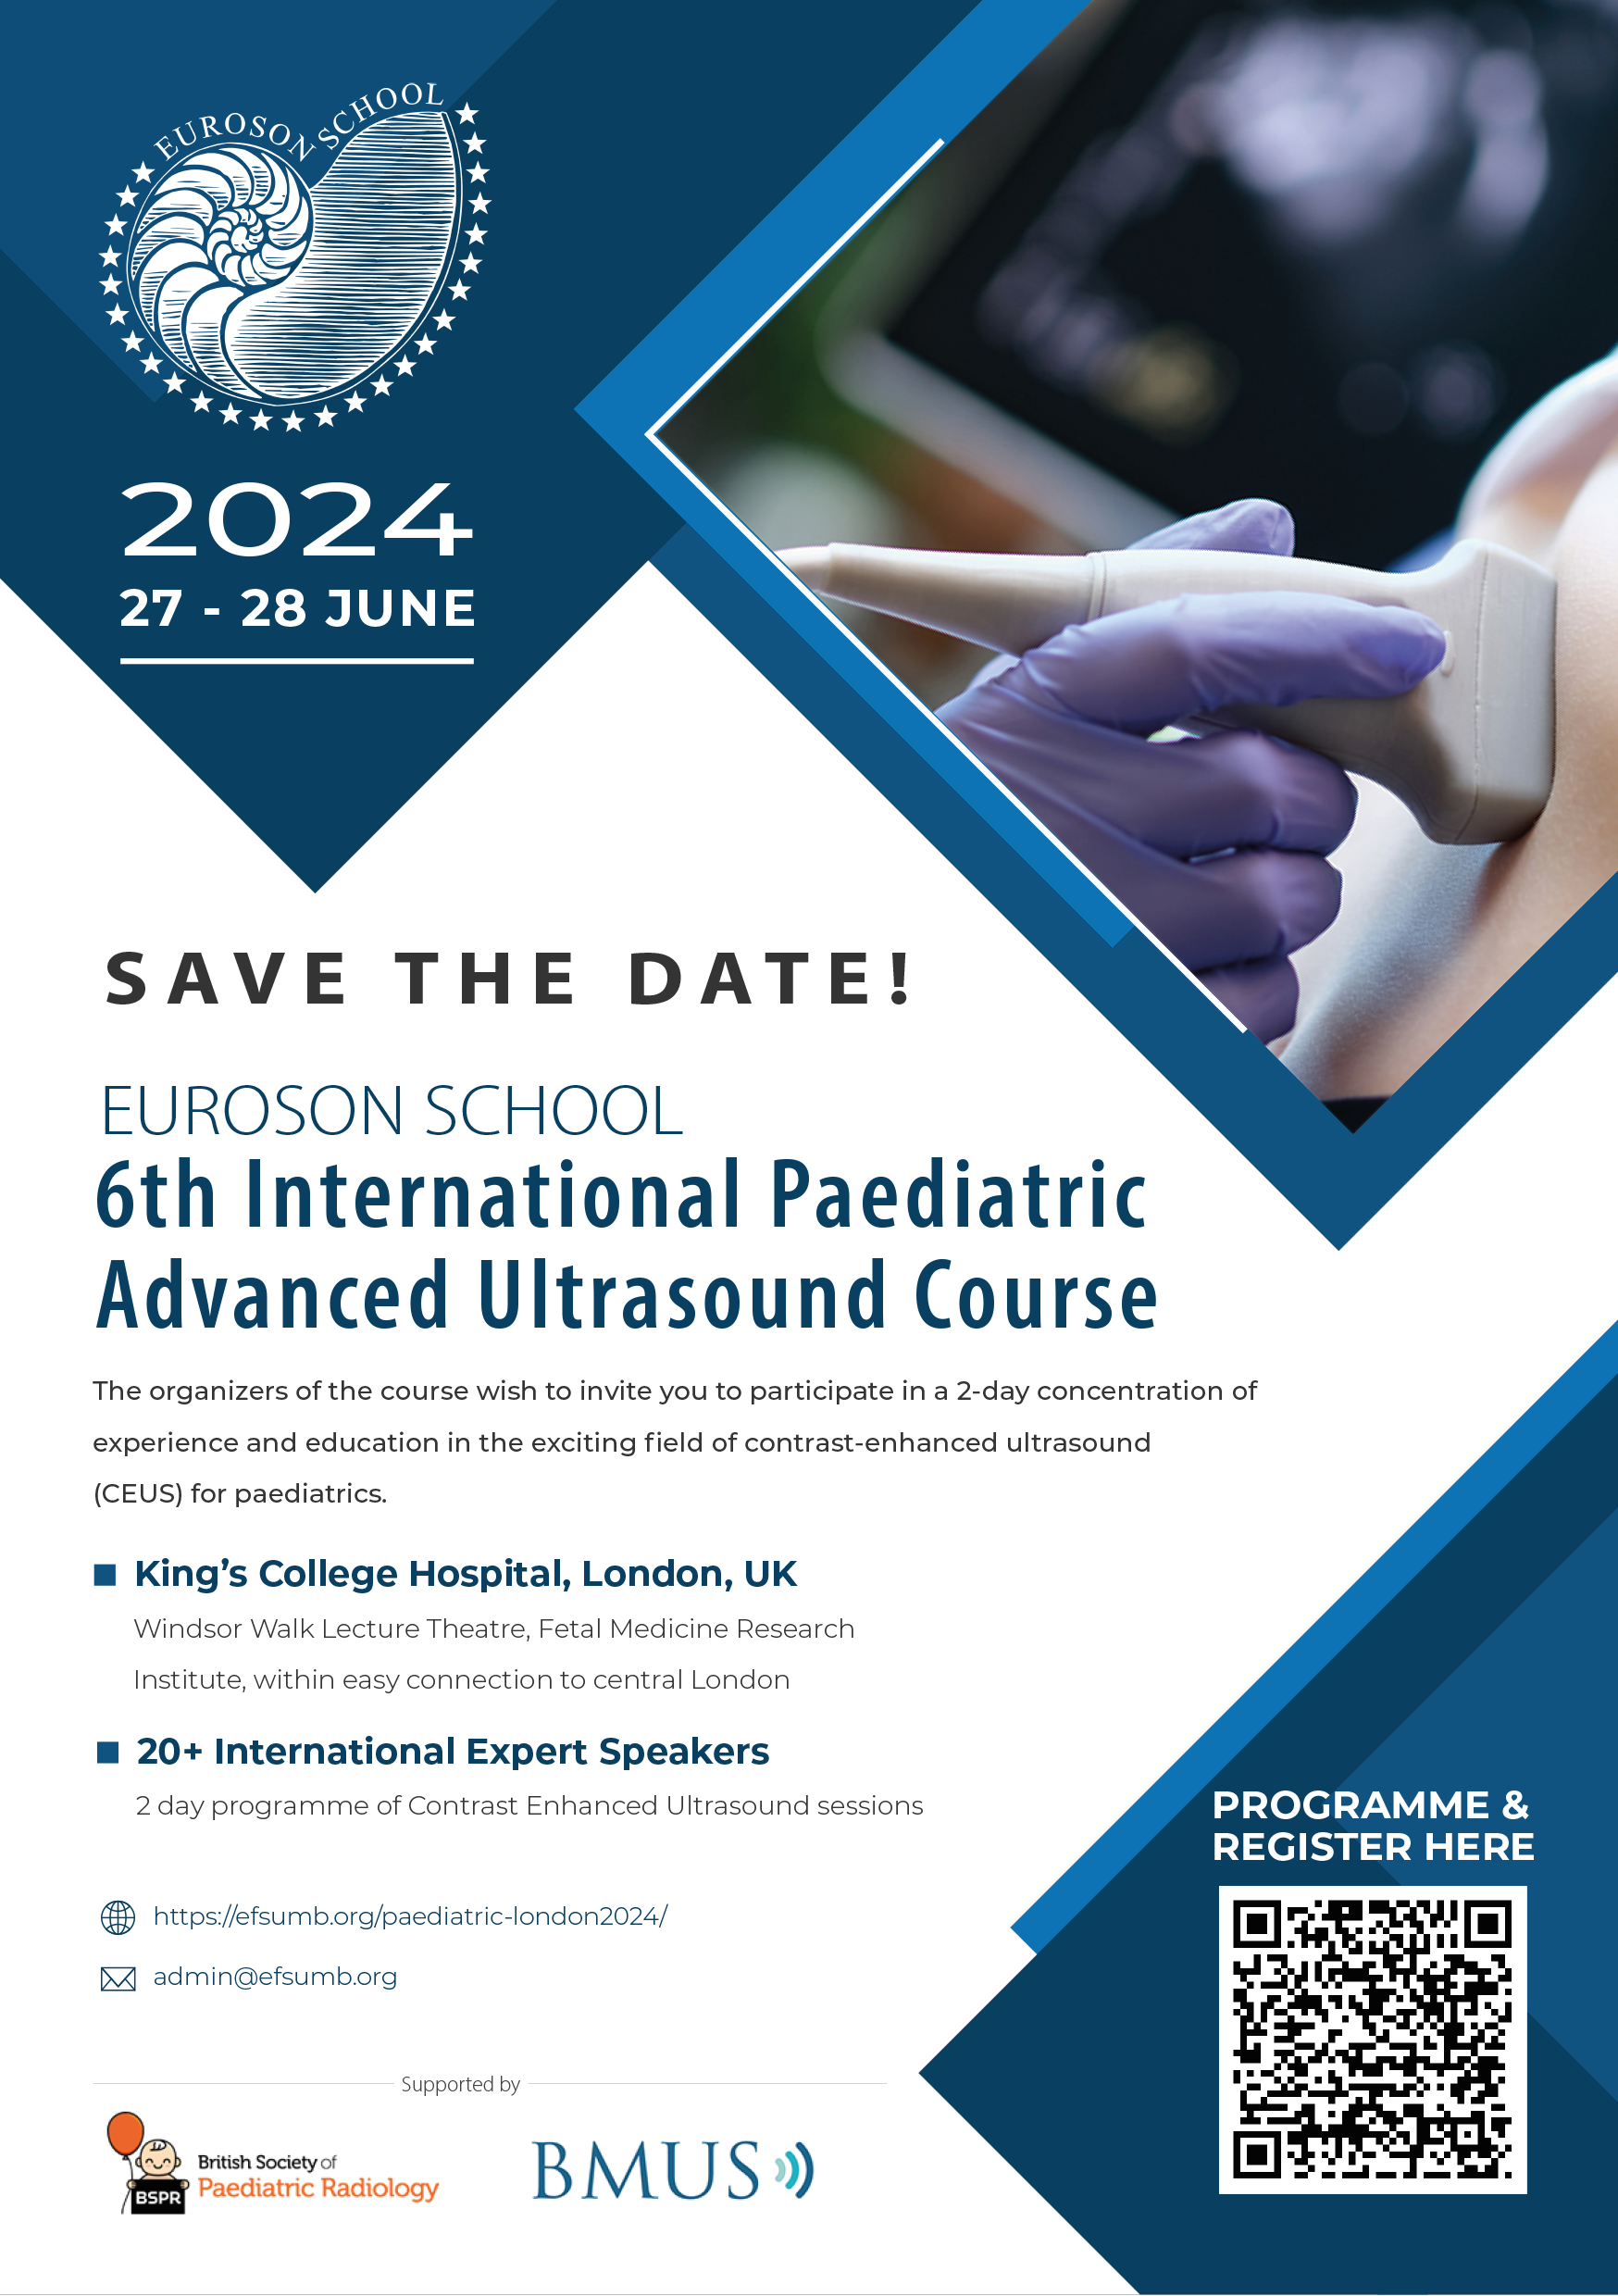 EUROSON SCHOOL: 6th International Paediatric Advanced Ultrasound Course